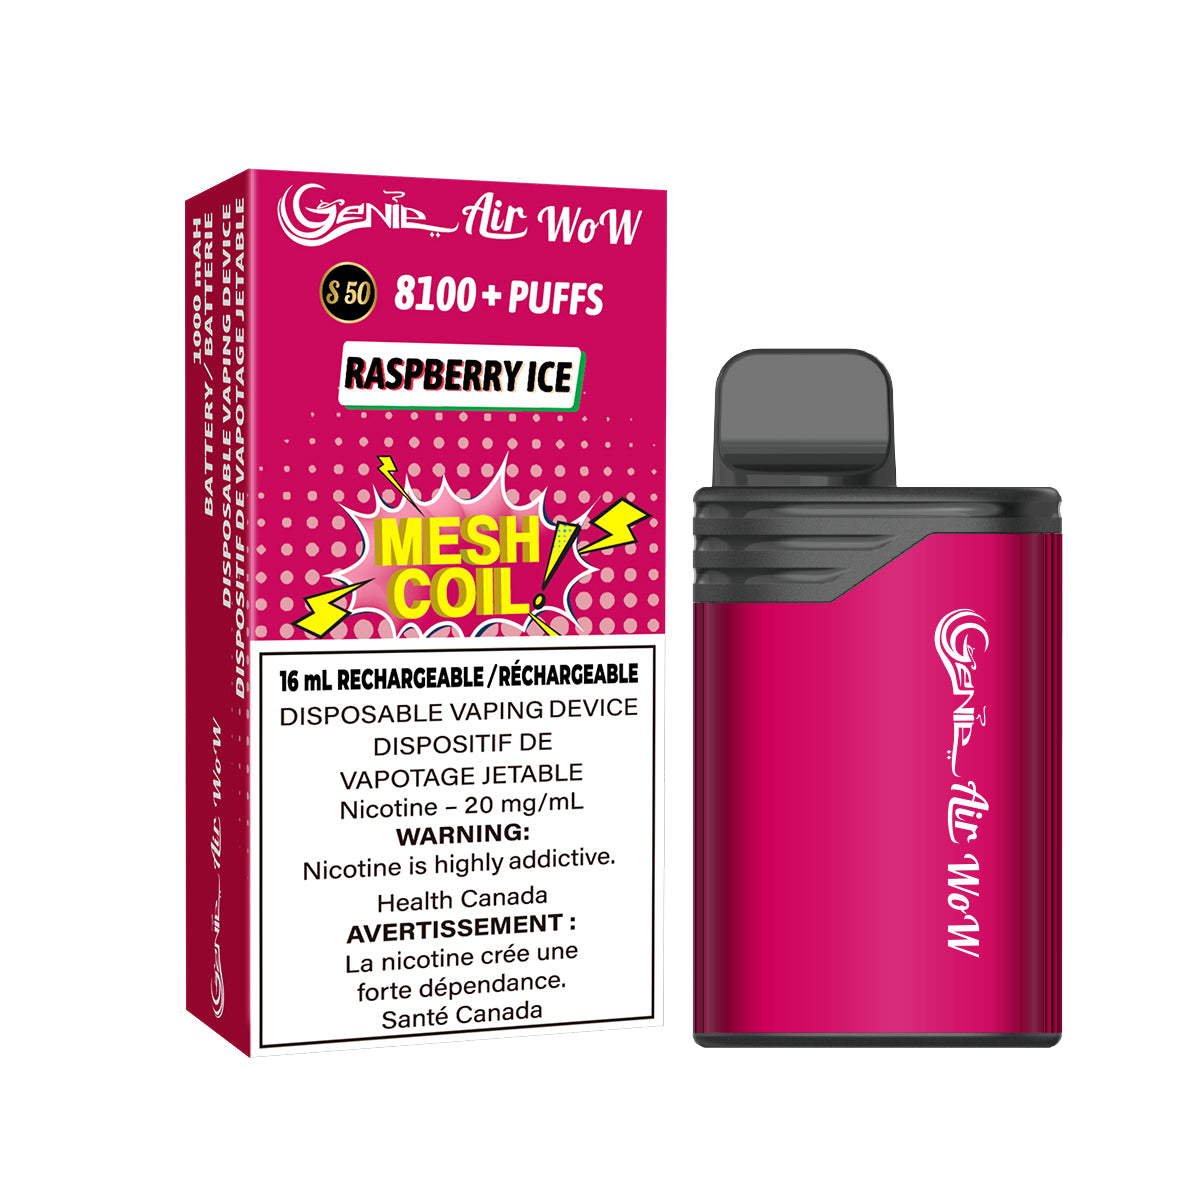 GENIE AIR WOW - raspberry ice 8100 Puffs  20 mg / mL Salt Nicotine  Juice Capacity: 16 mL  Battery: 1000 mAh Rechargeable   Mesh Coil Technology    s50